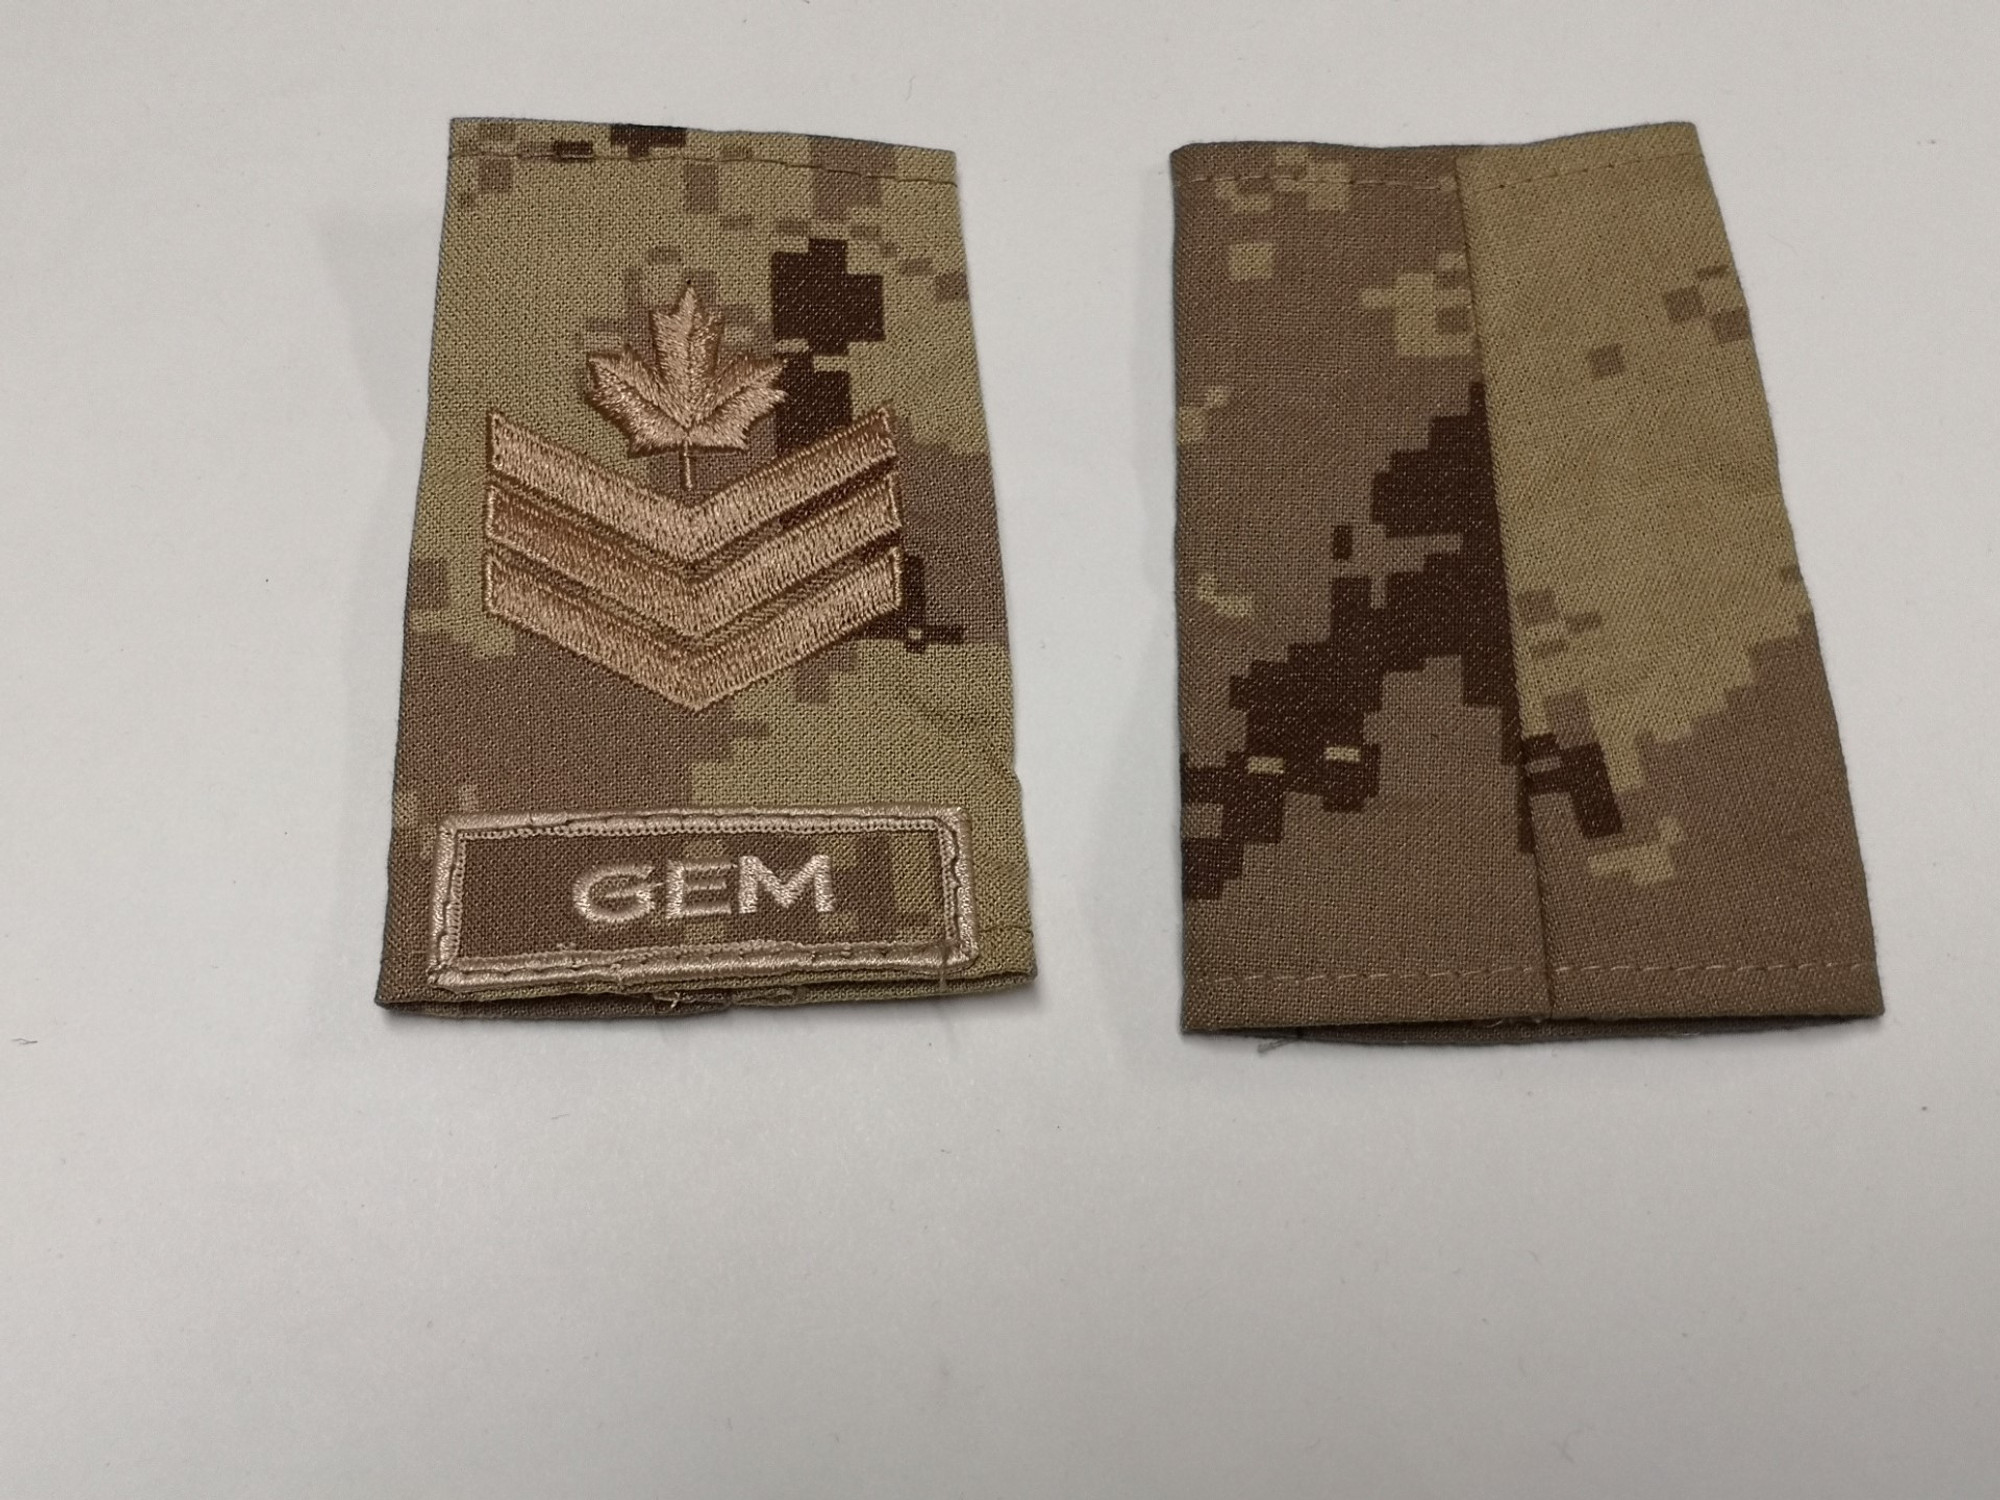 Canadian Armed Forces Arid Cadpat Rank Epaulets GEM - Sergeant